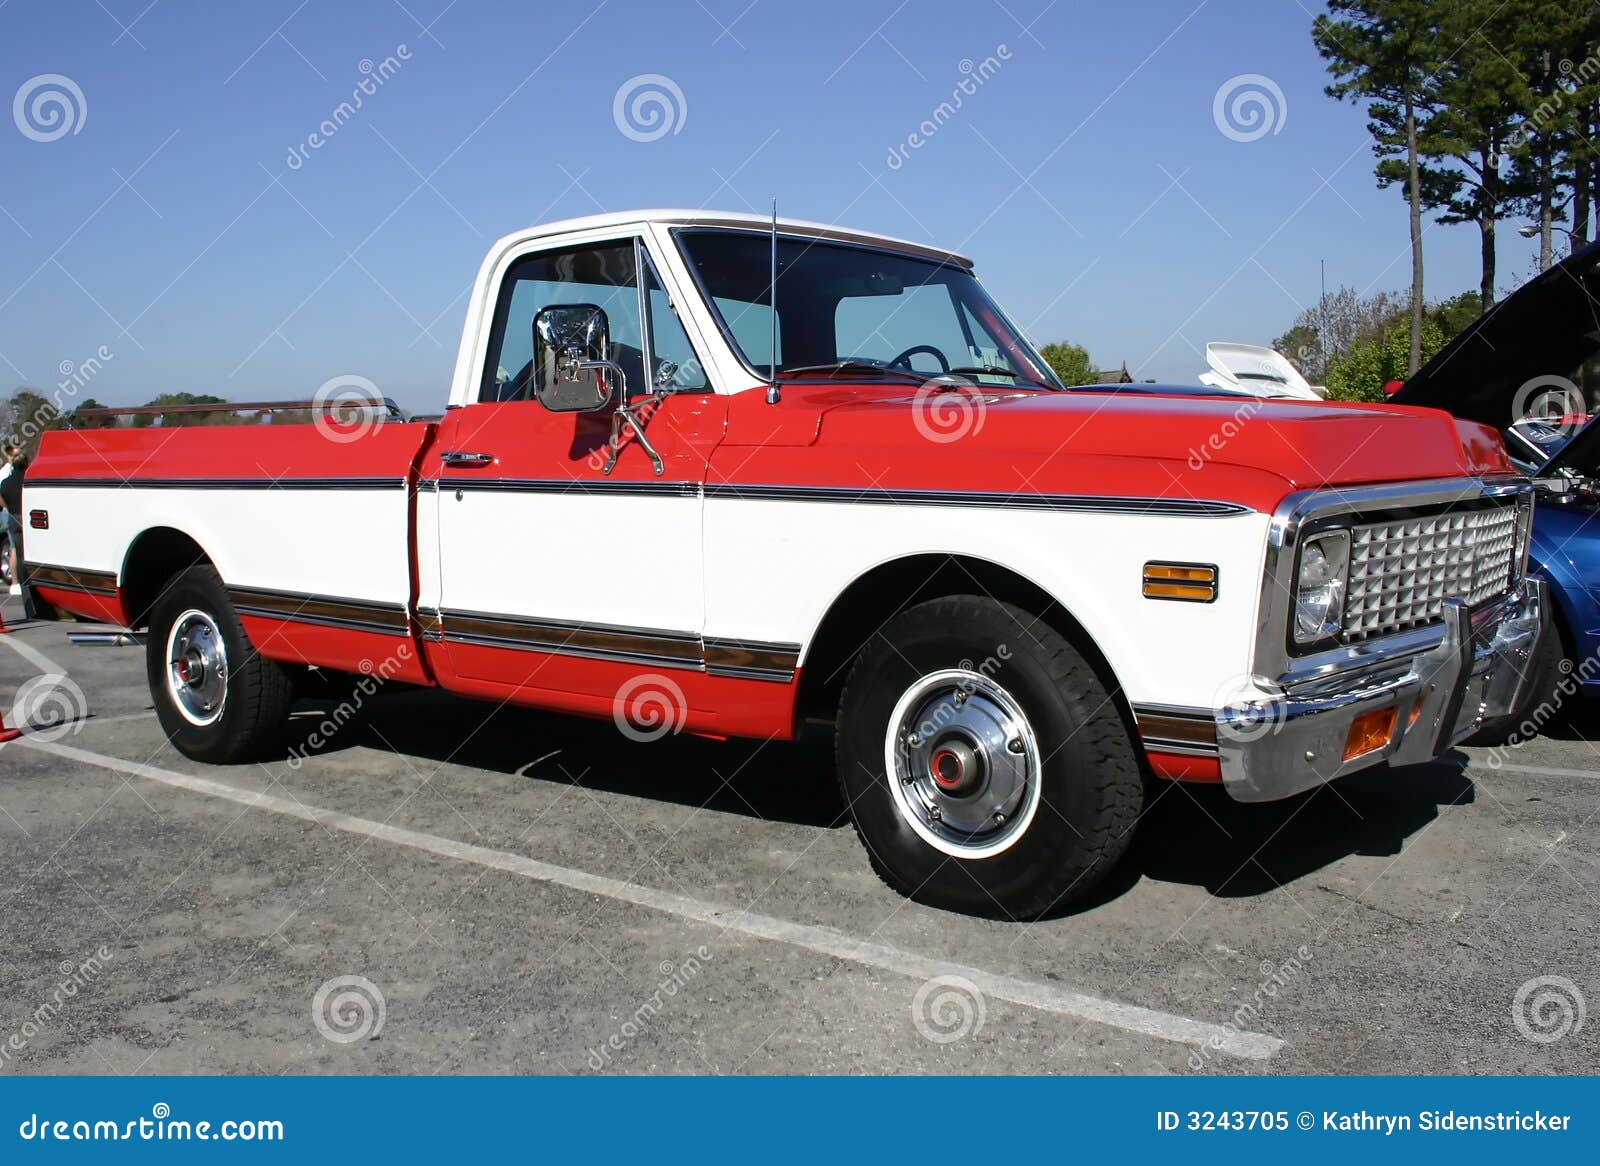 1972 chevrolet pickup truck